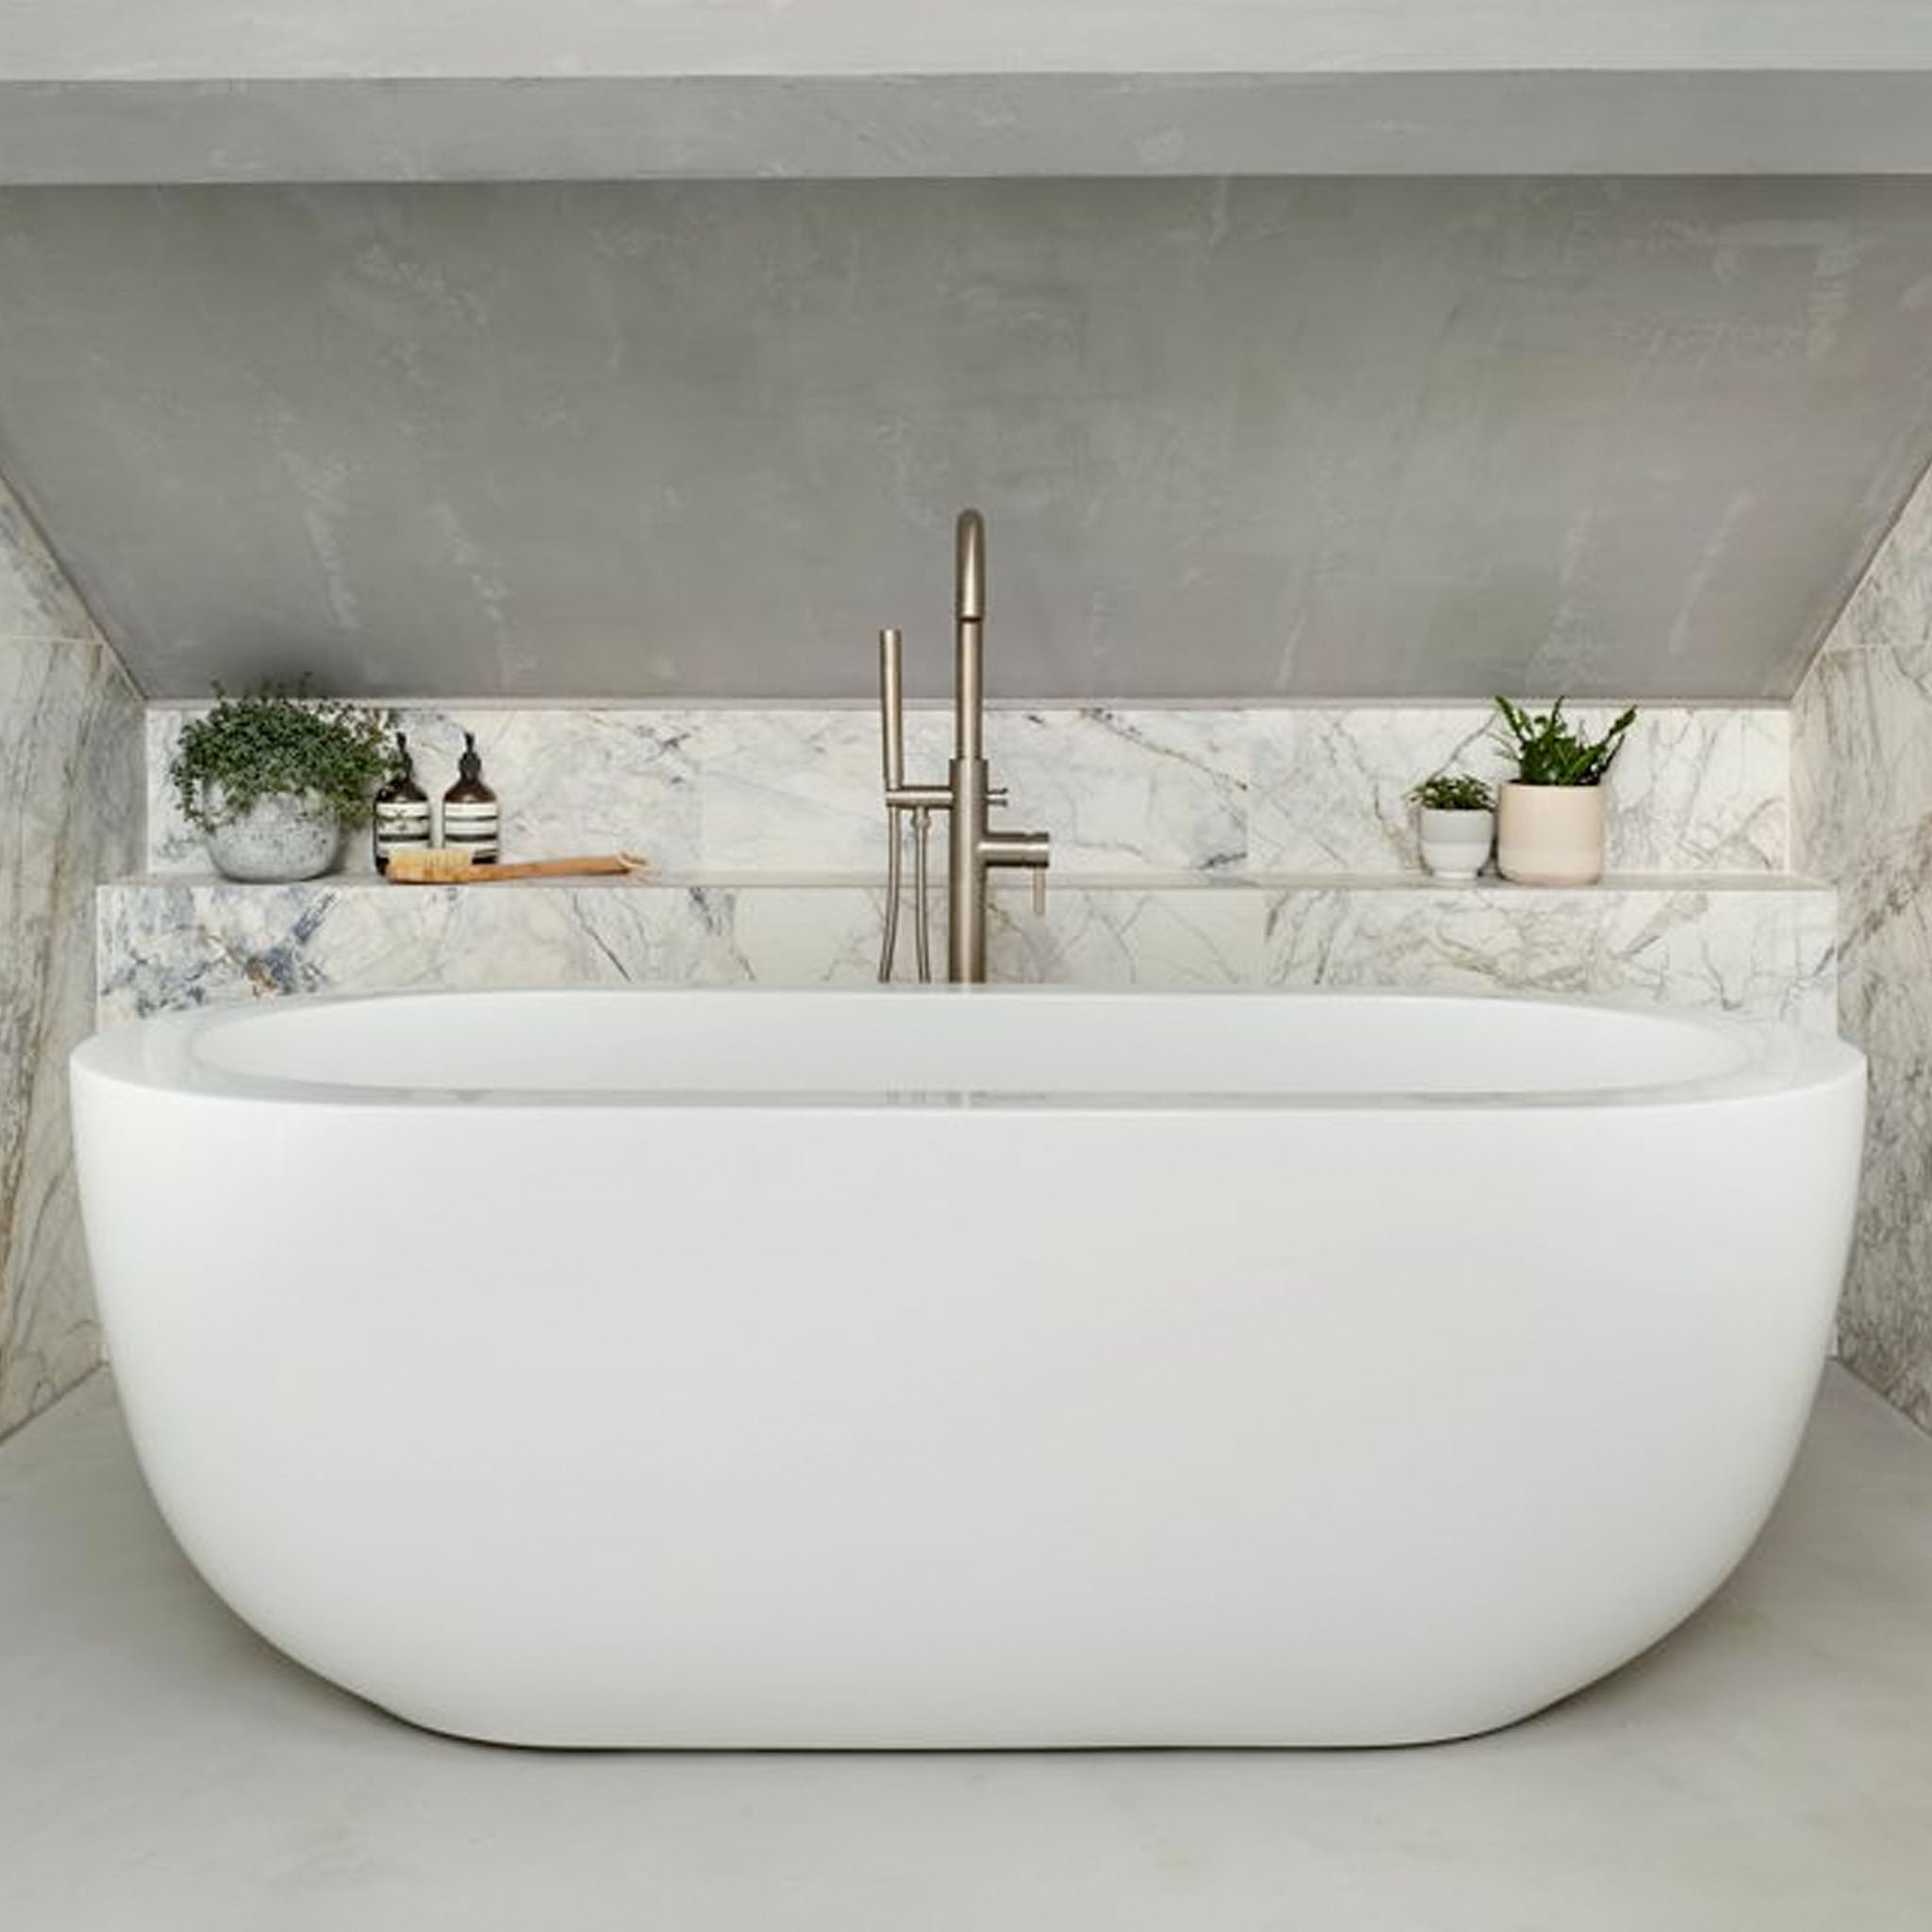 BC Designs Ovali Double Ended Acrymite Bath